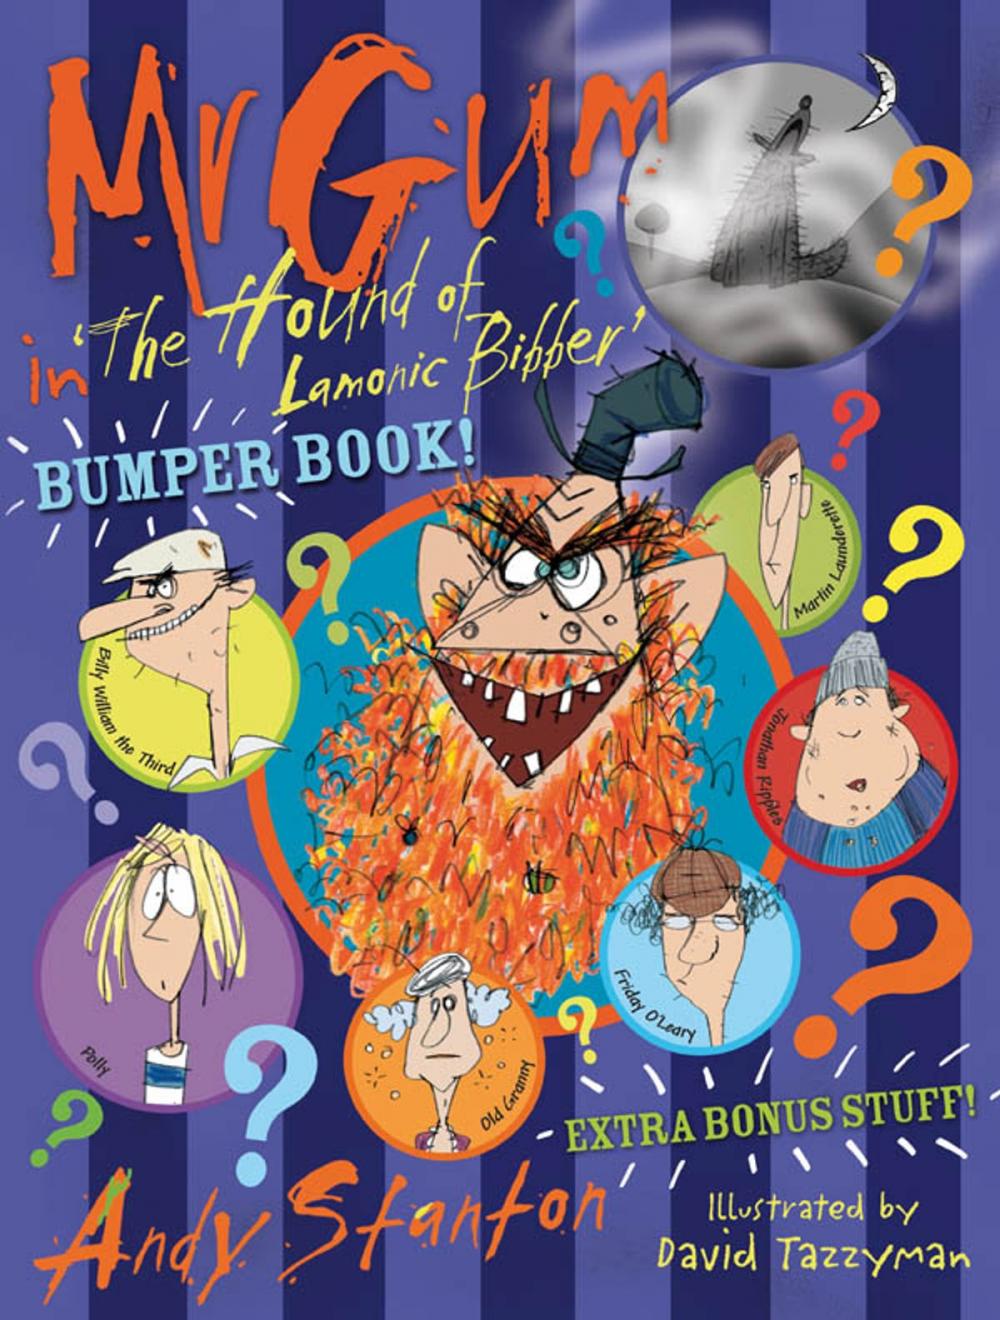 Big bigCover of Mr Gum in 'The Hound of Lamonic Bibber' Bumper Book